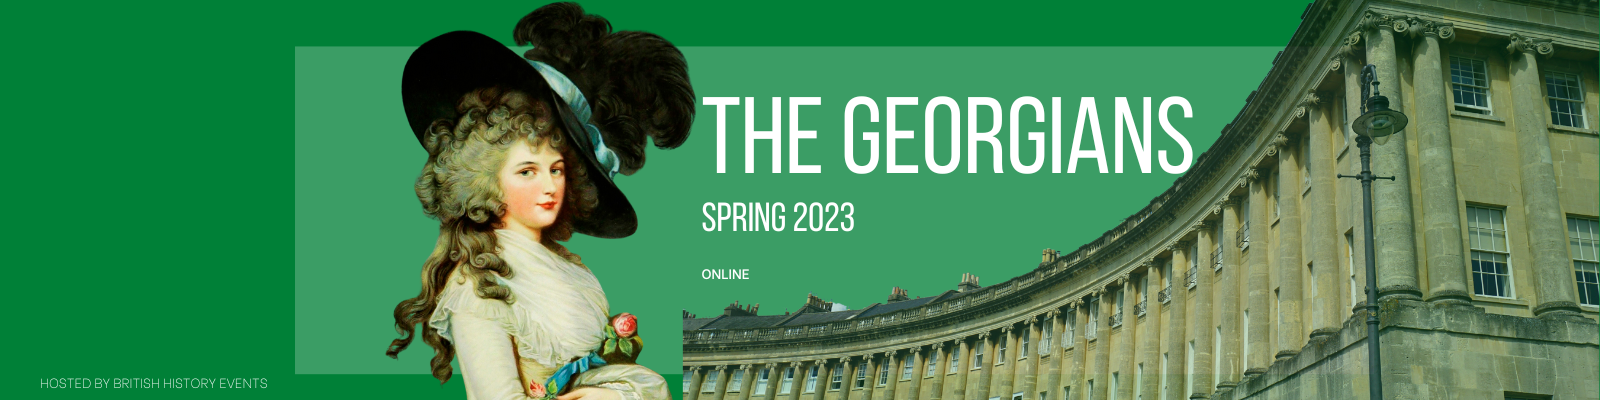 The Georgians Online History Festival Spring 2023